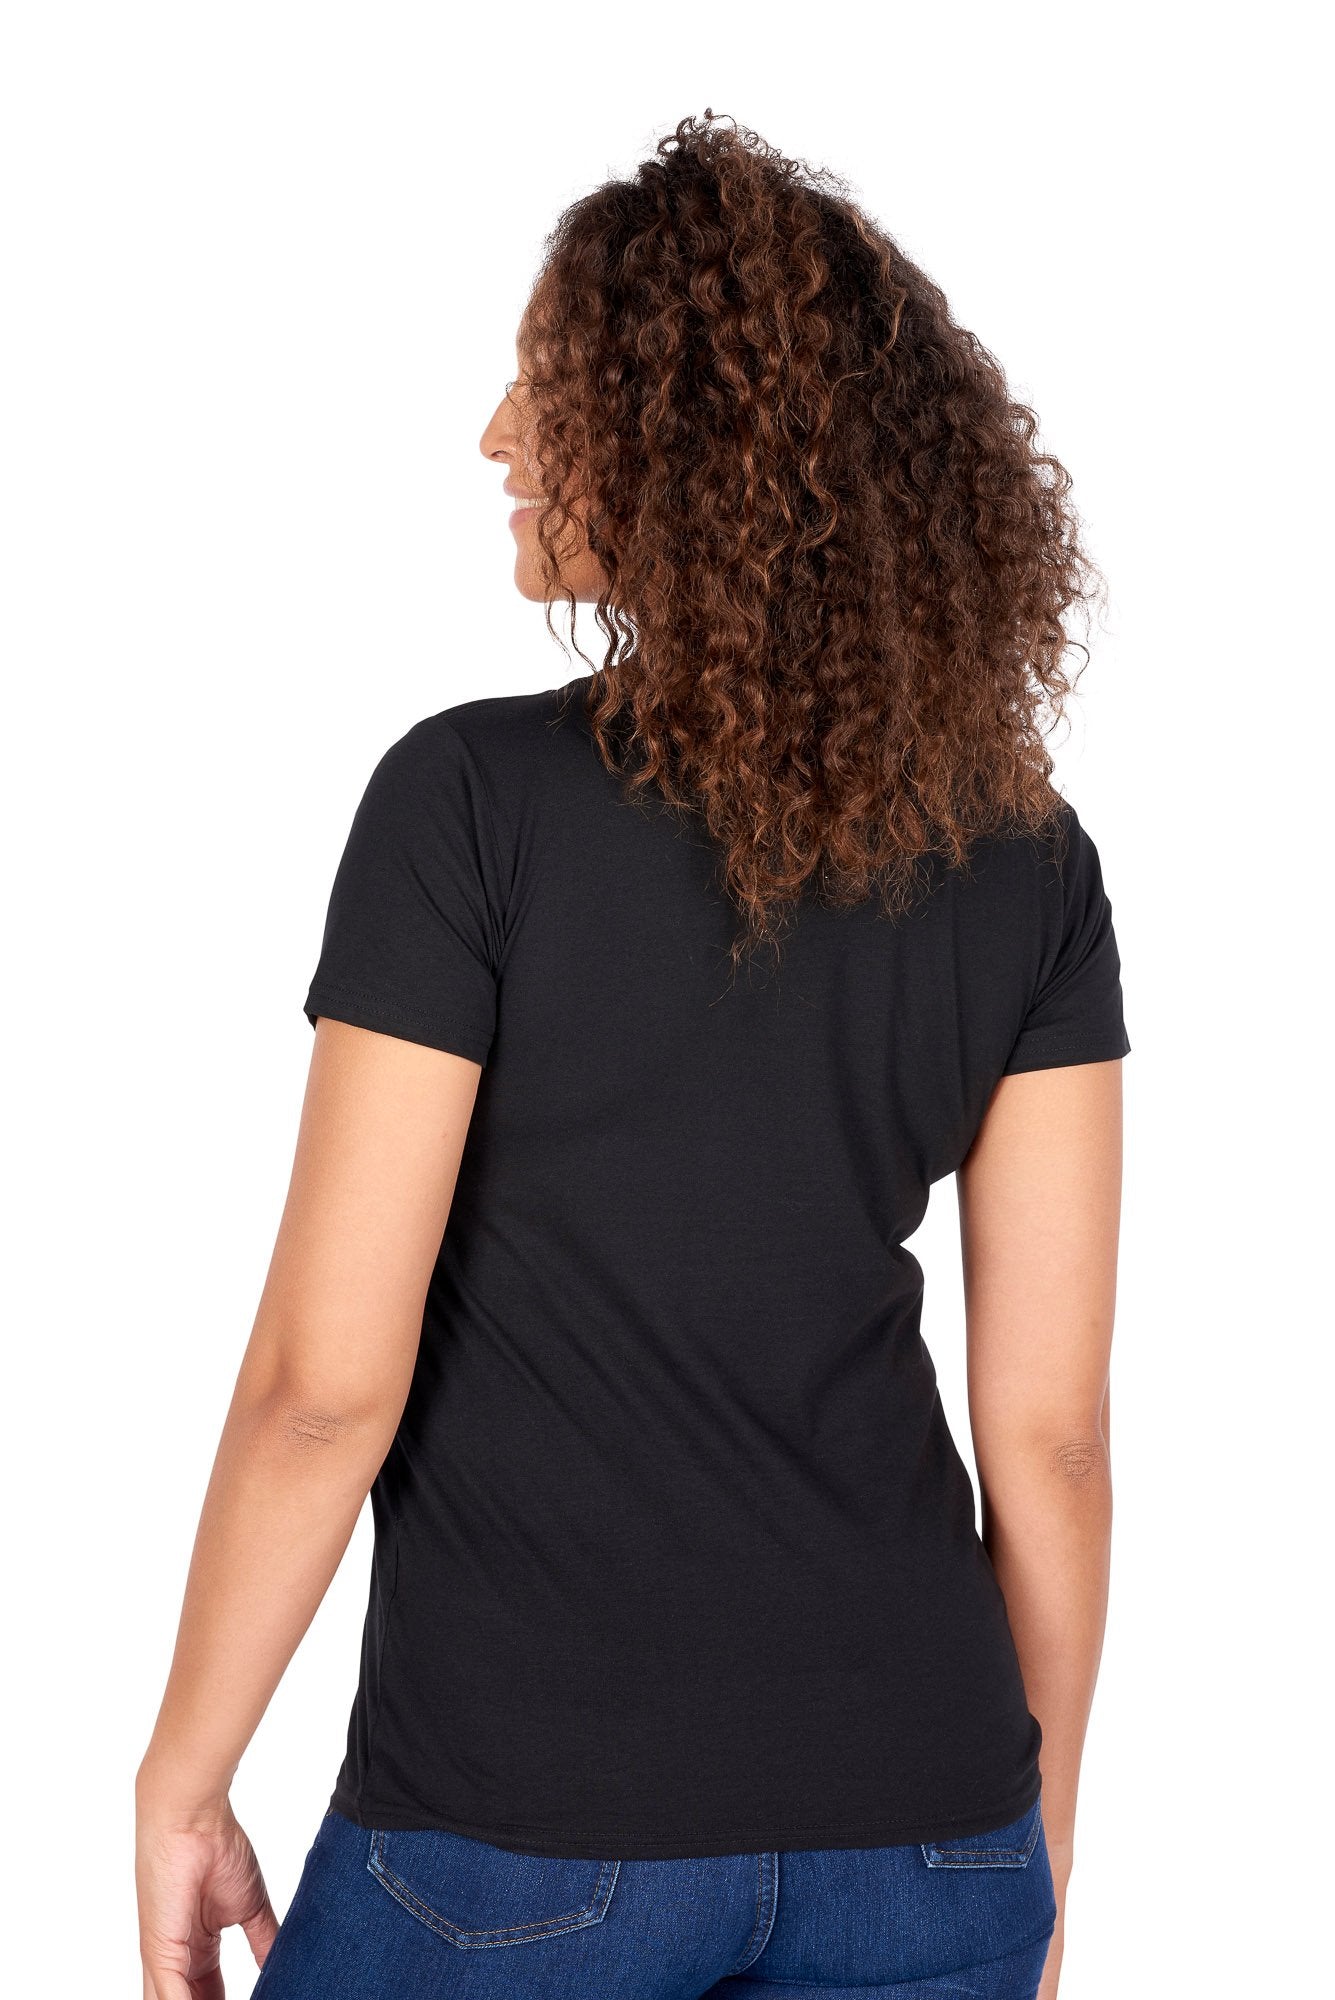 Women's Runr Elements T-Shirts - Black